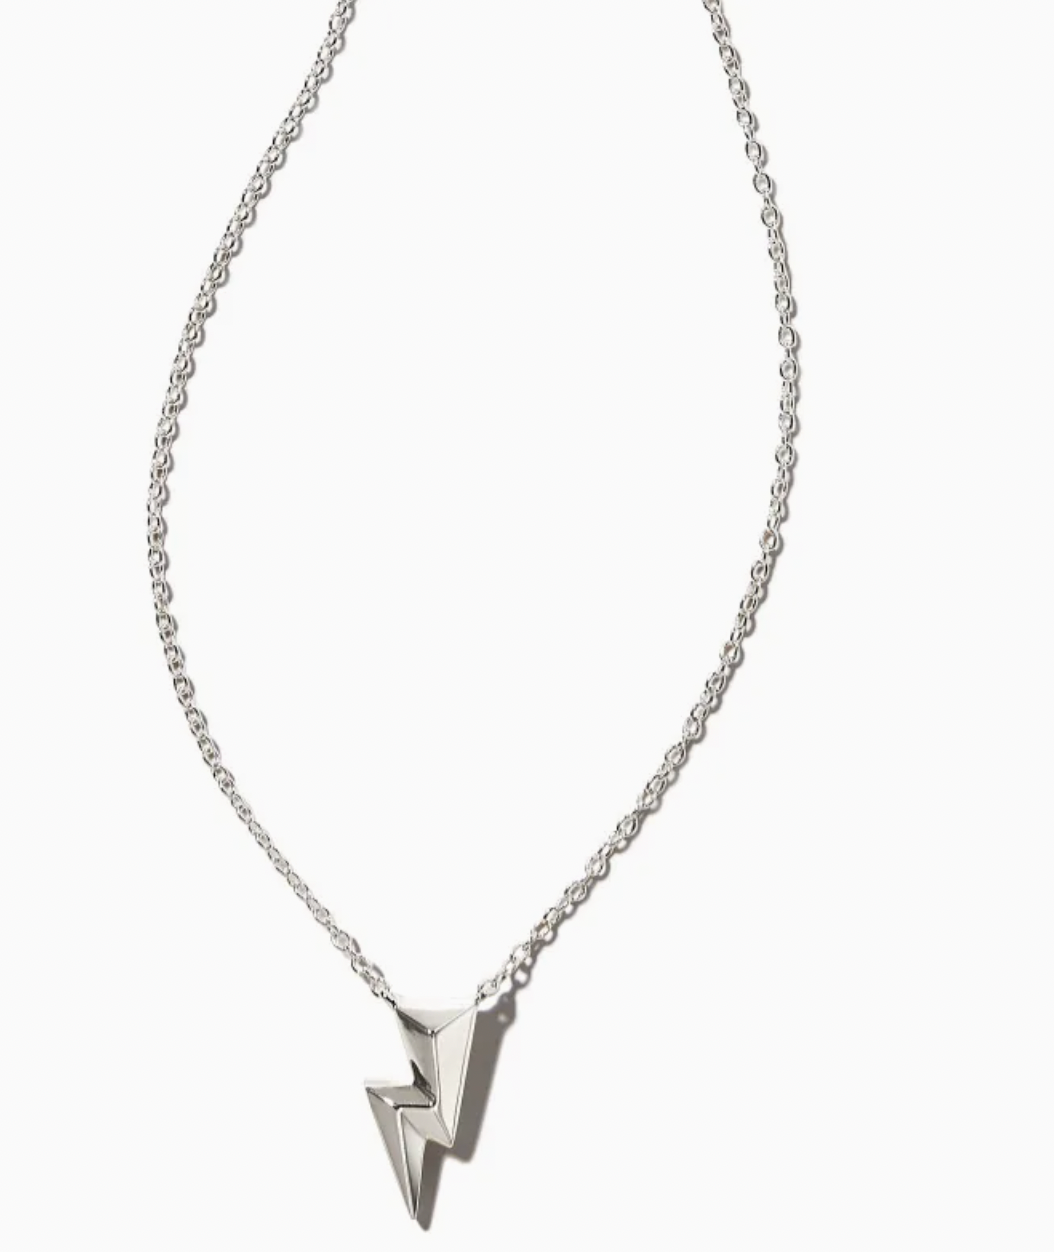 Kendra Scott Bolt Pendant Necklace in Silver